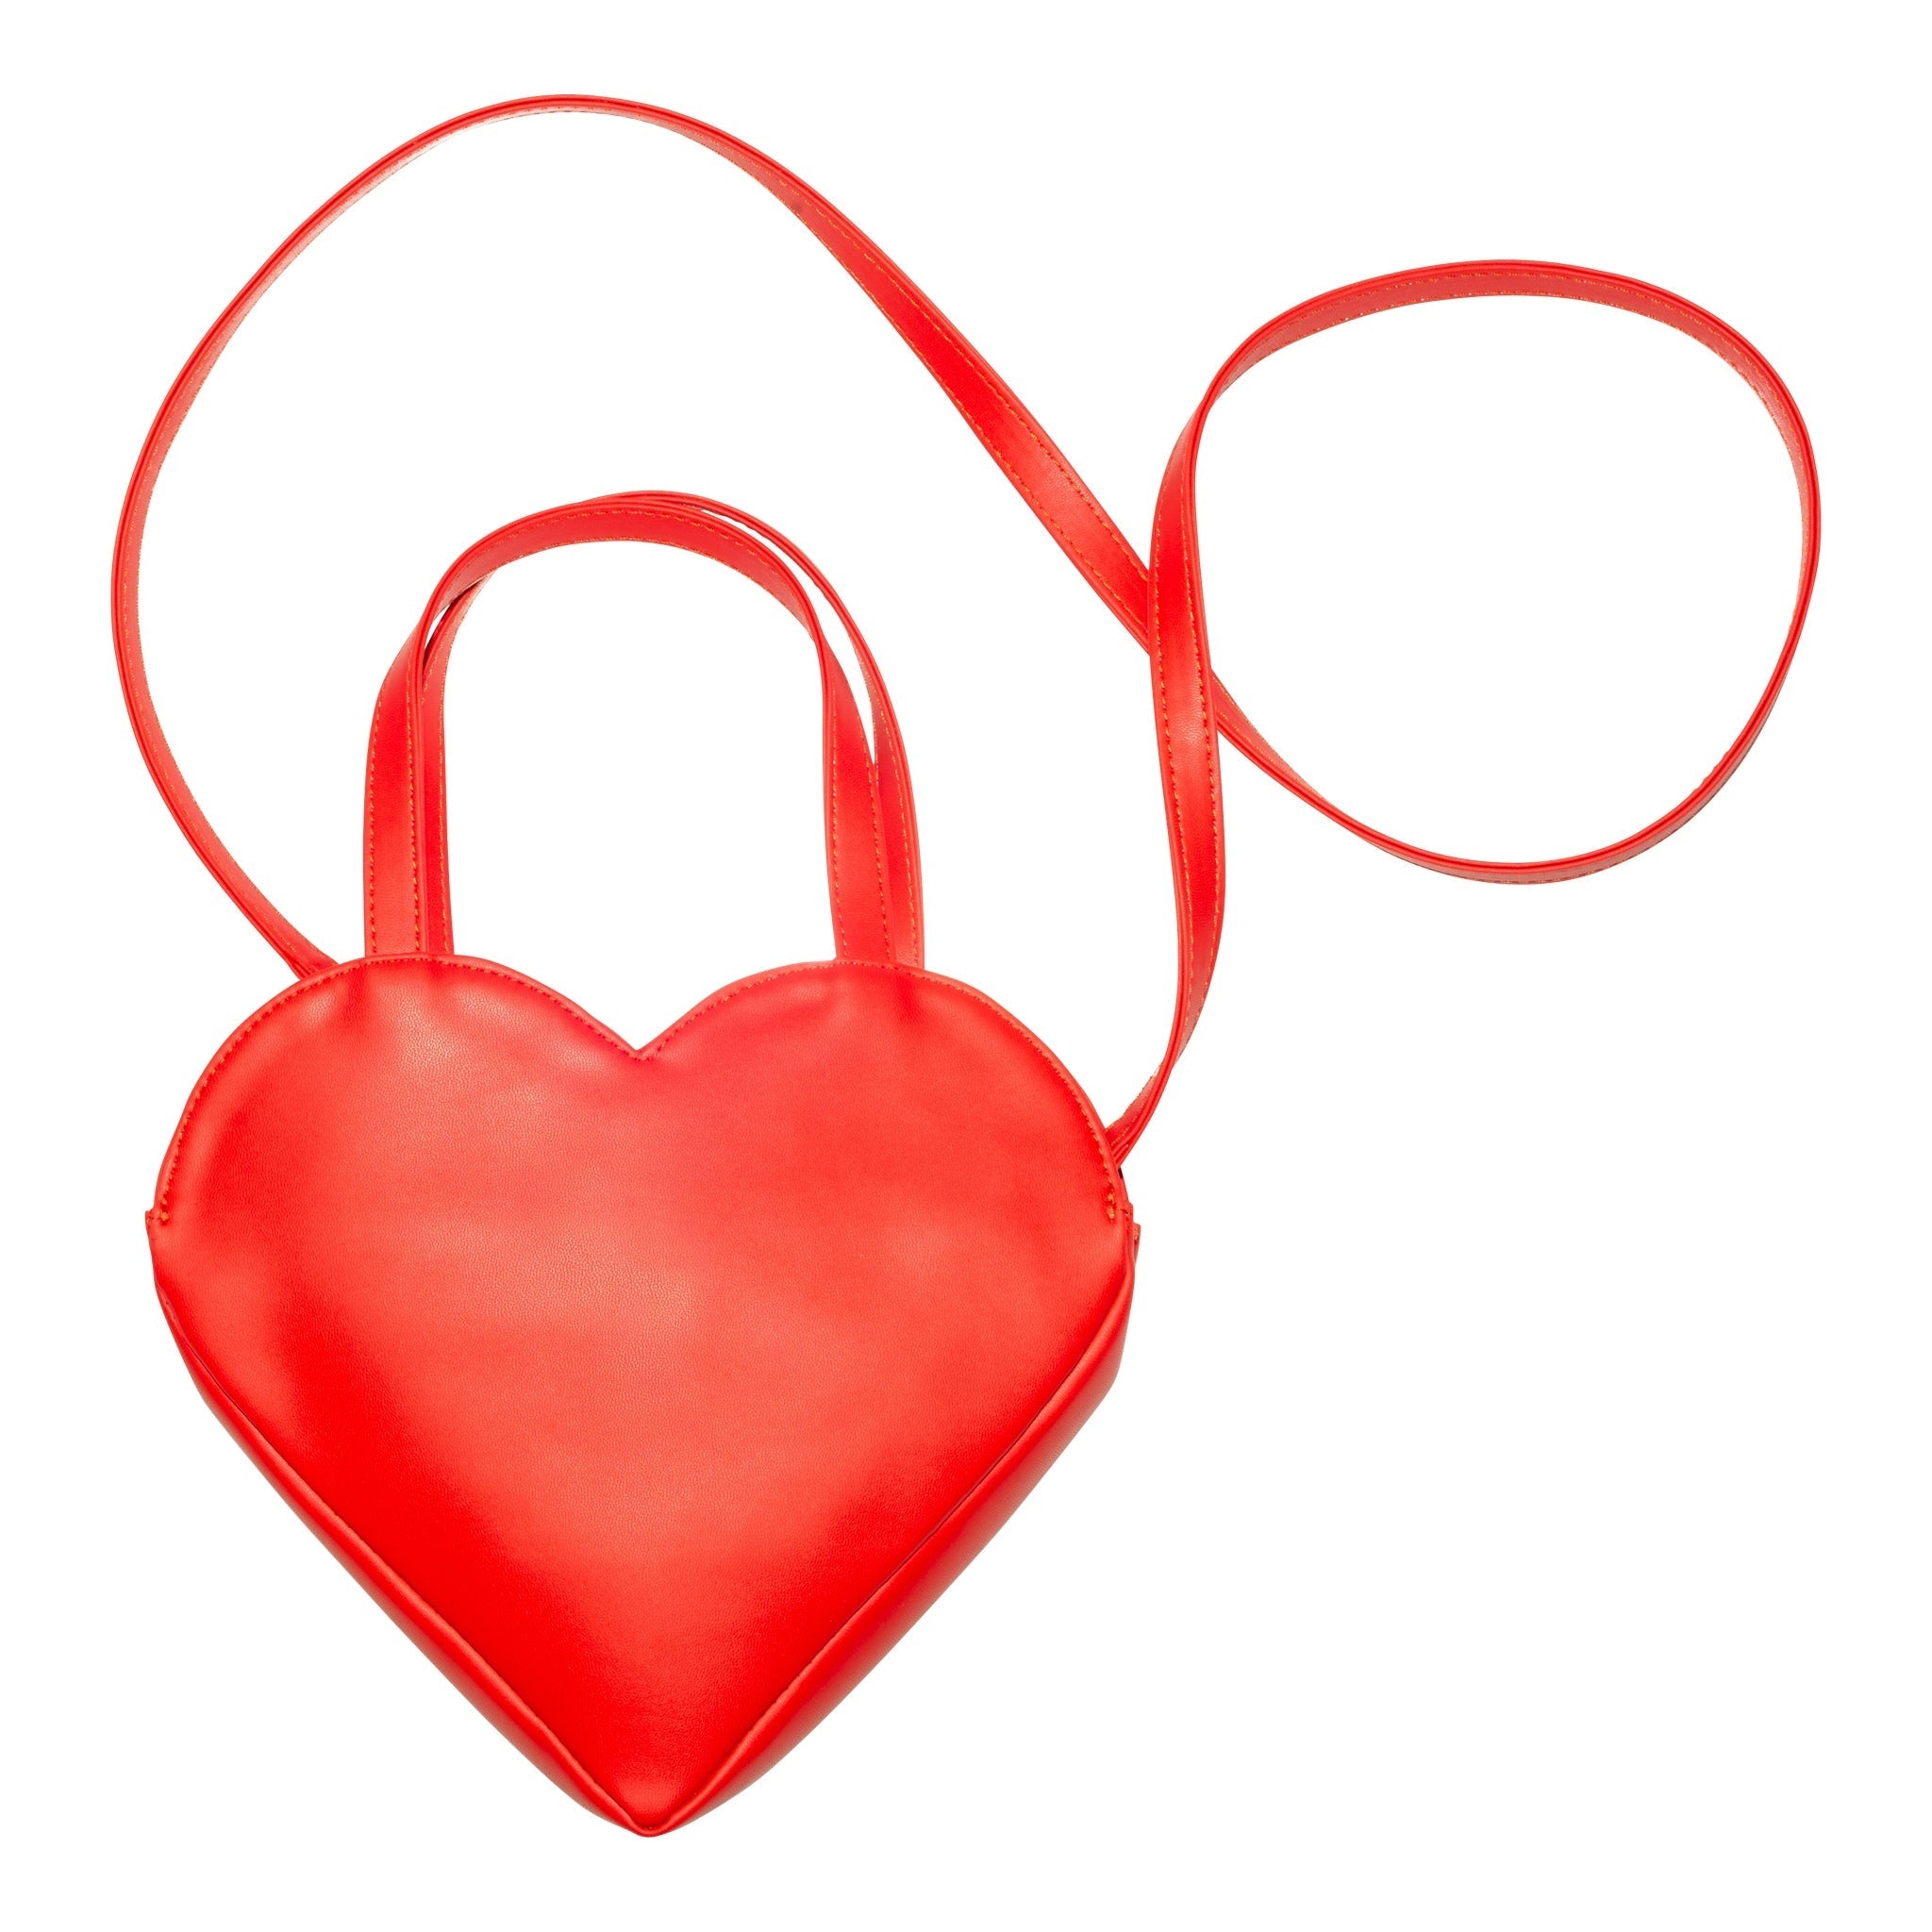 HOZEN red heart shaped purse with crossbody strap